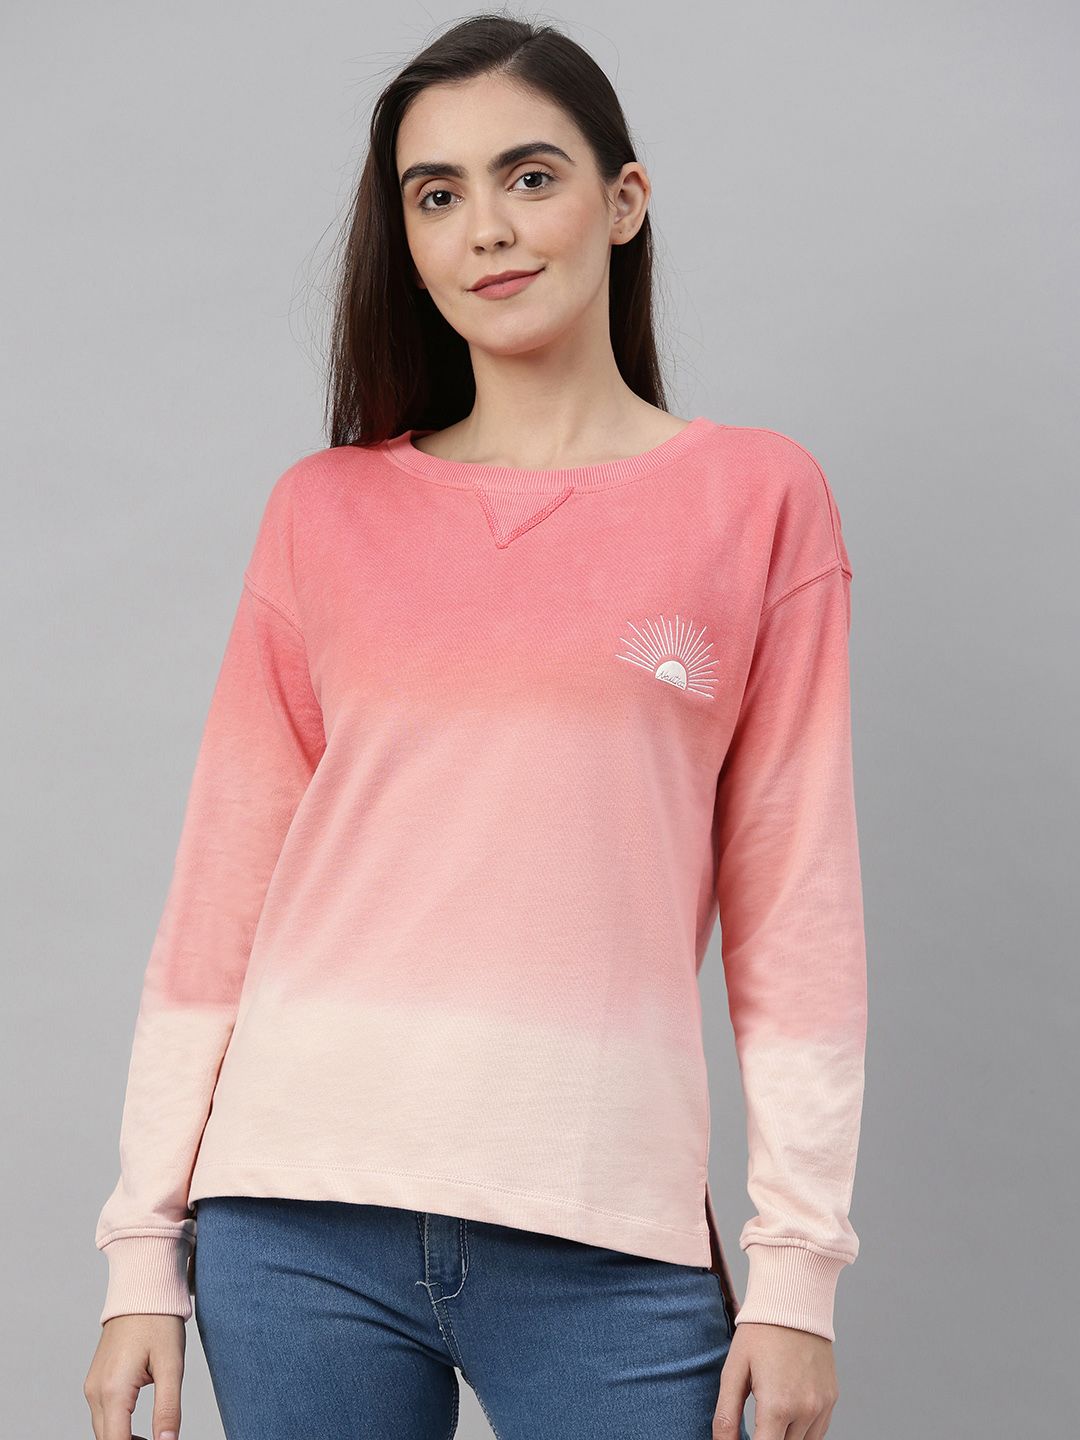 Nautica Women Pink Colourblocked Sweatshirt Price in India